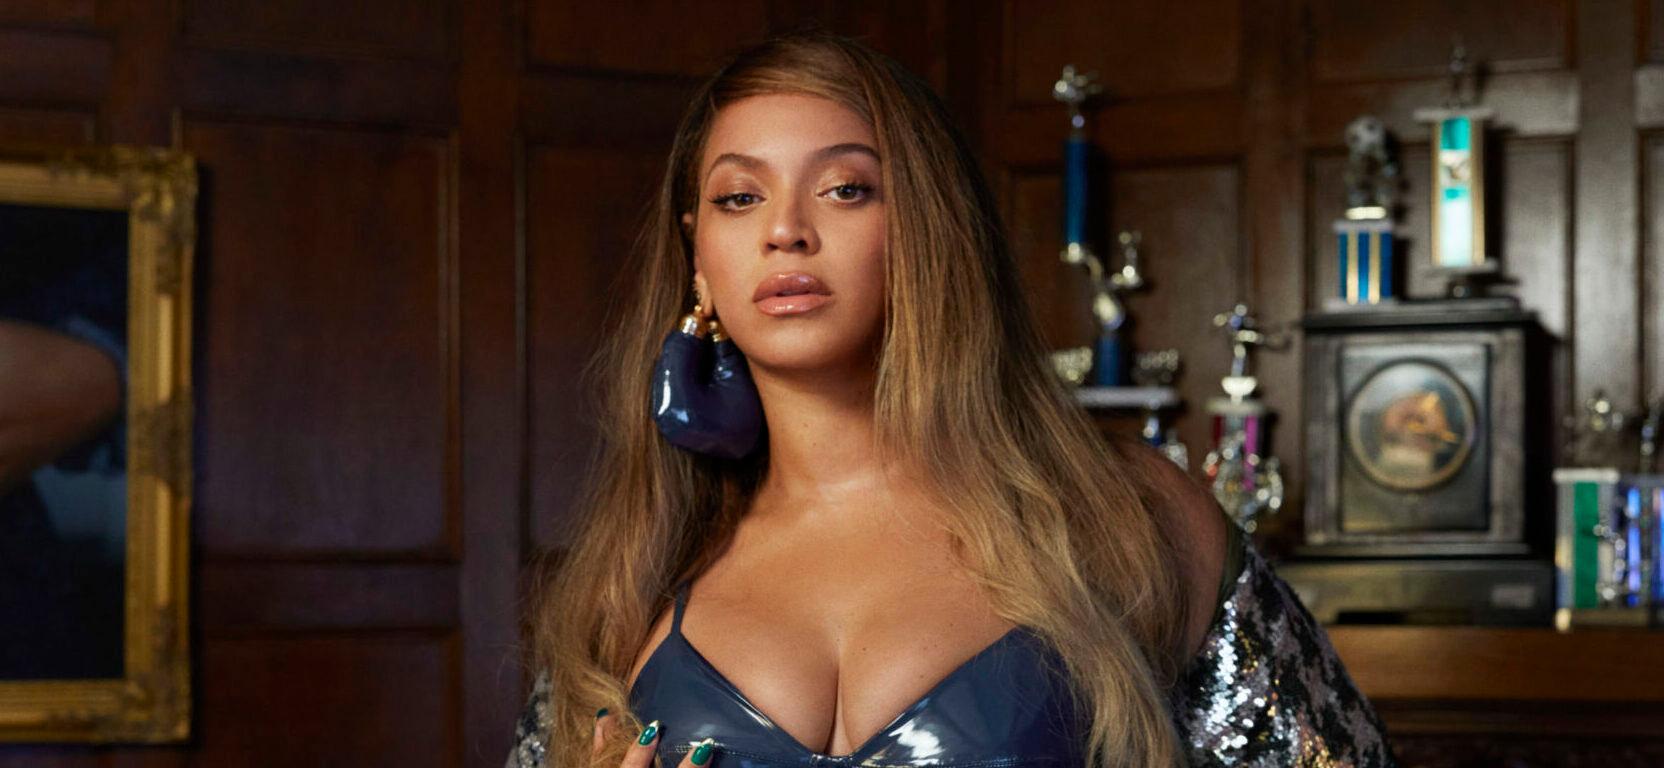 Beyoncé drops new song "Break My Soul" early, on Tidal